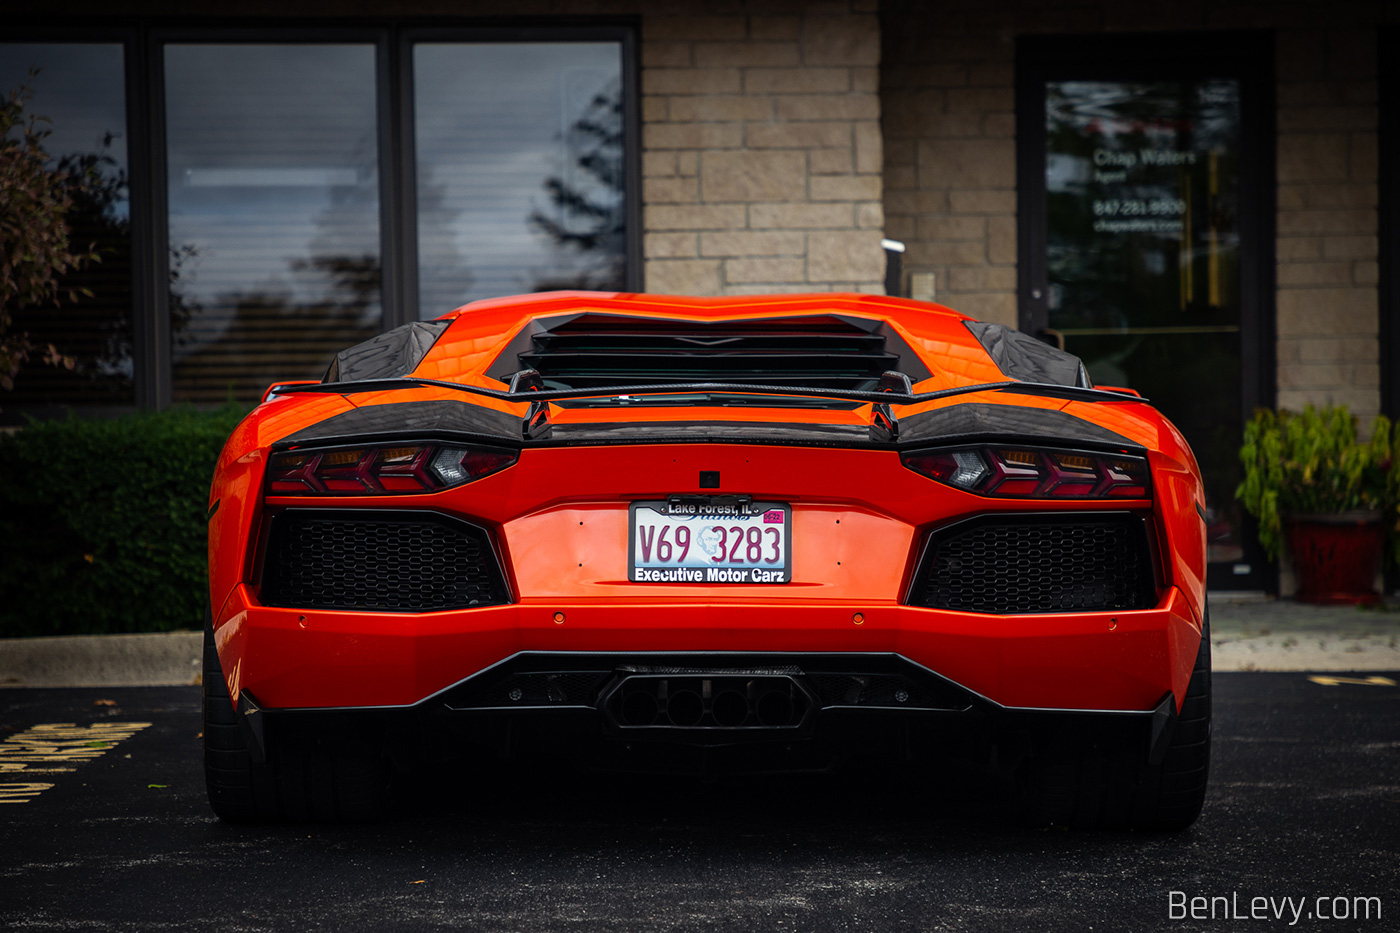 Rear View of Orange Lamborghini Aventador